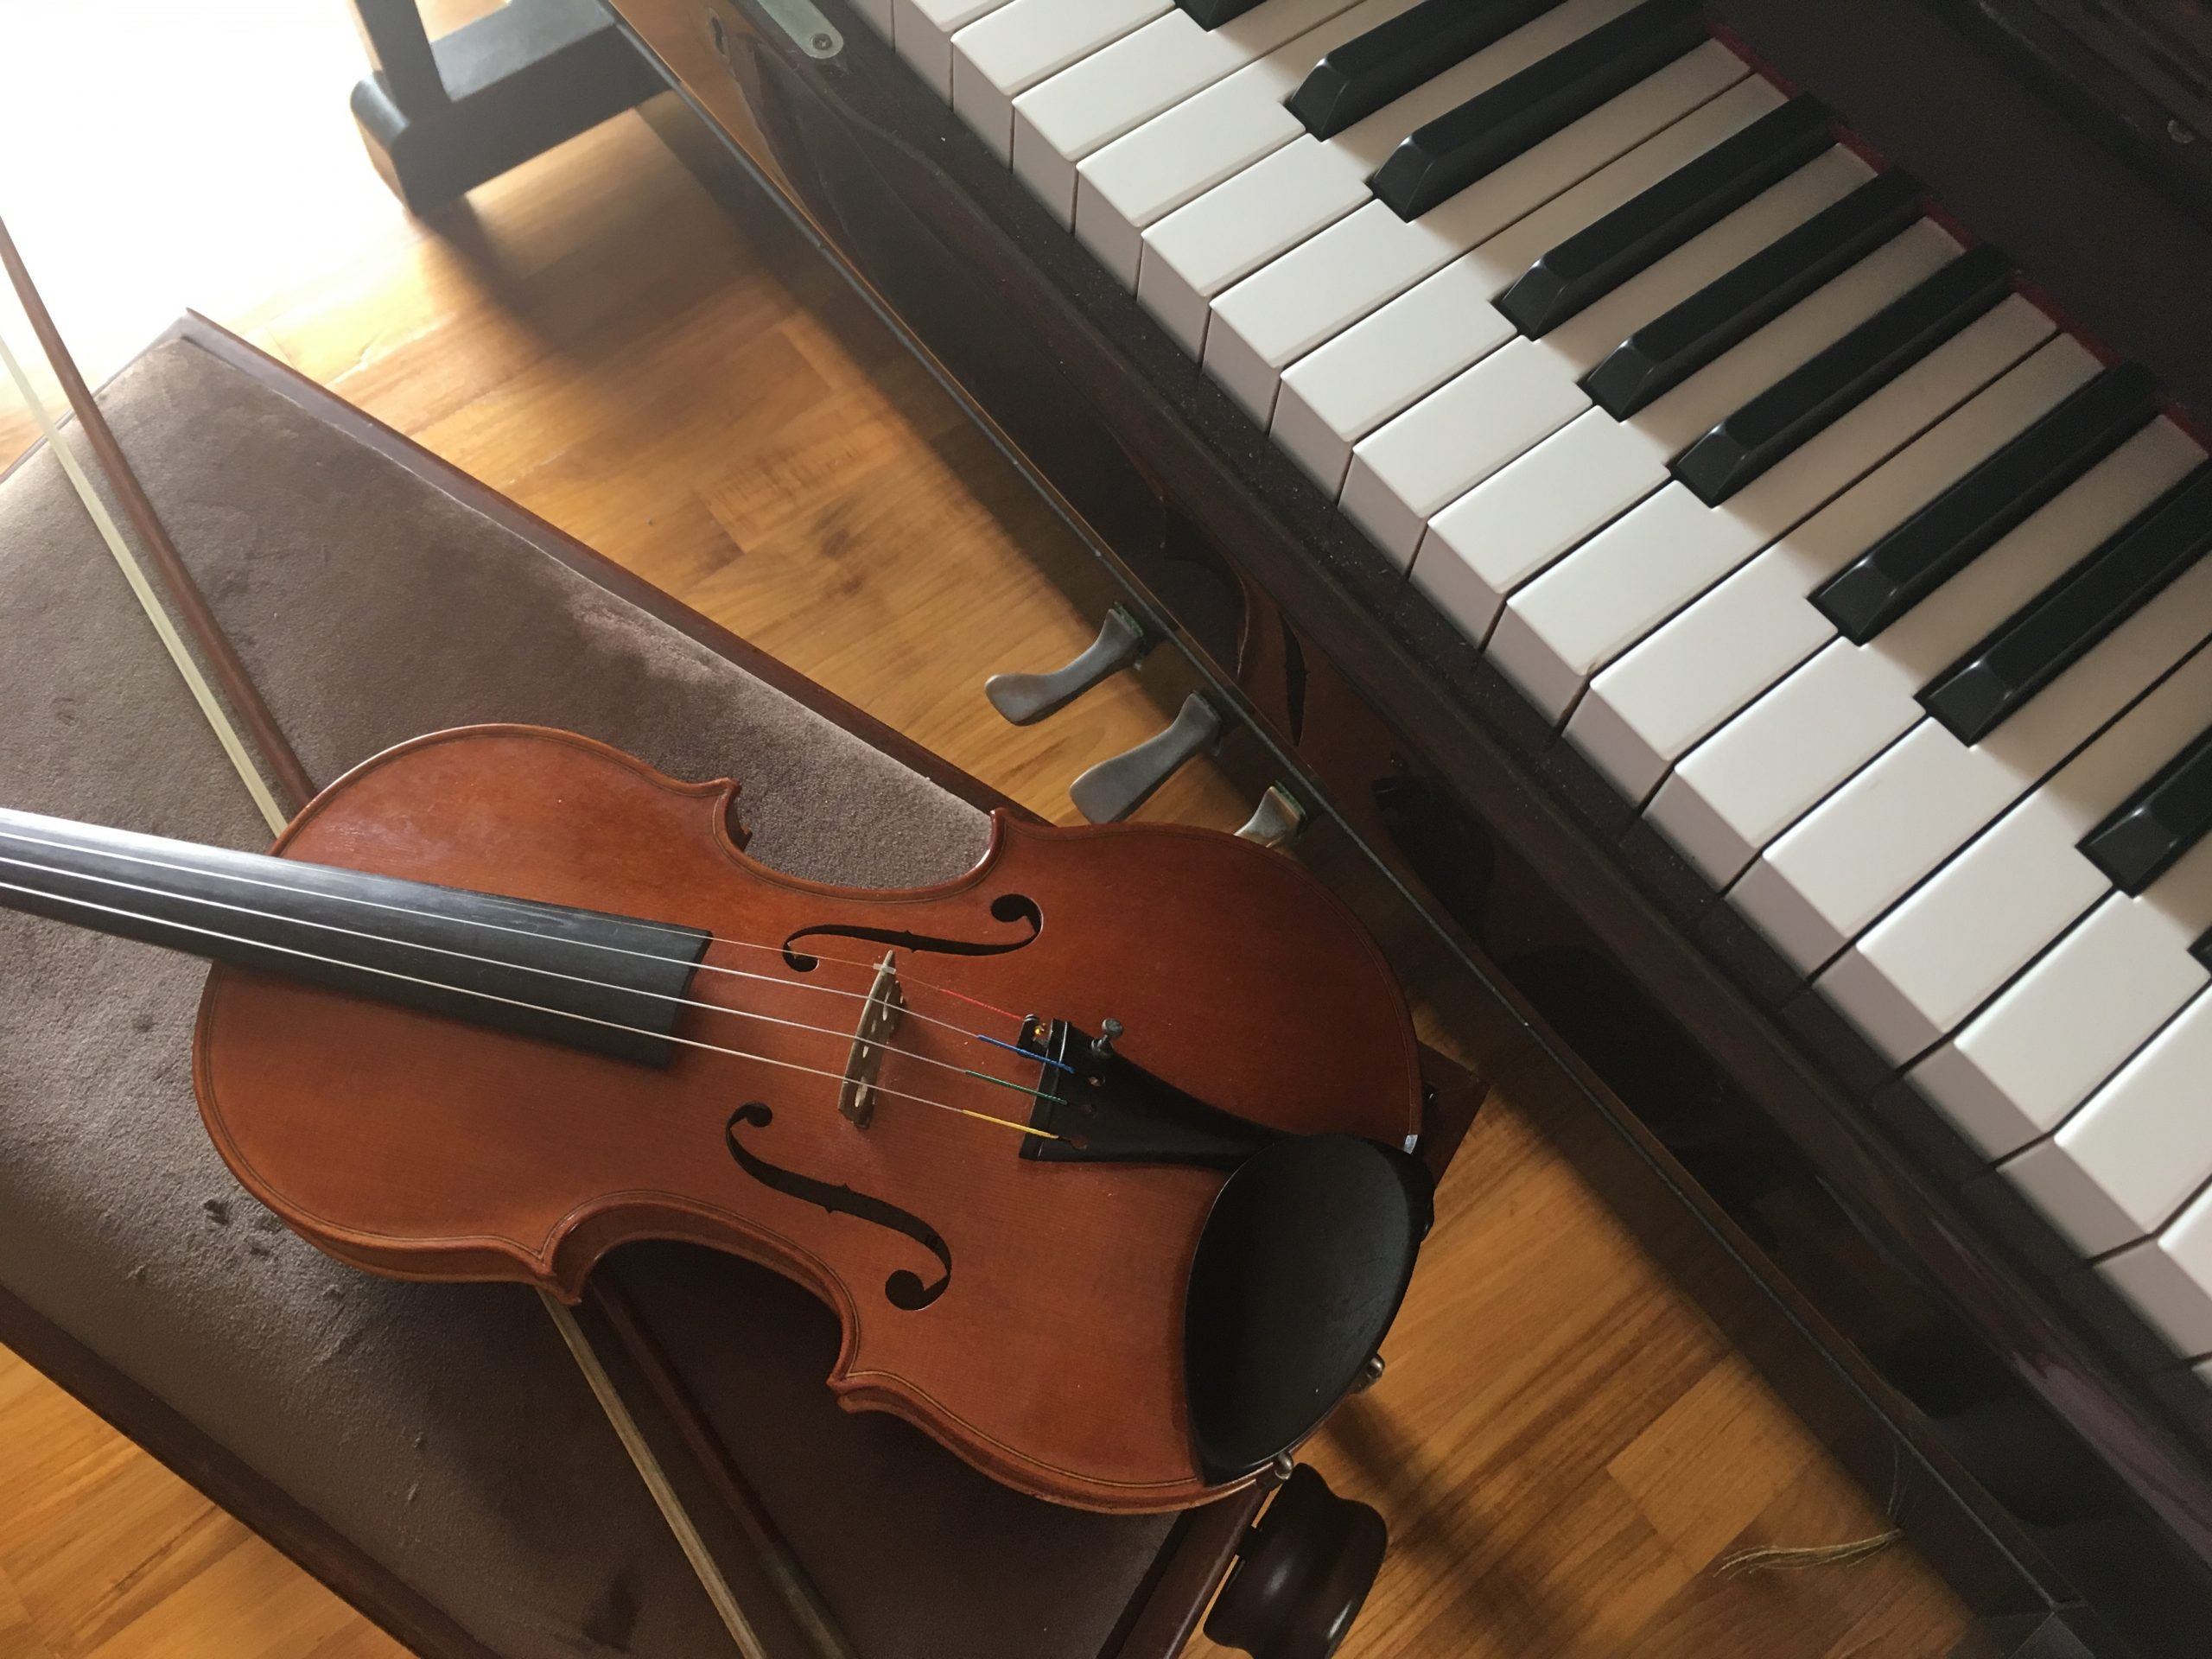 2560x1920 Piano and Violin Teacher | Music teacher Singapore | Harmony Makers